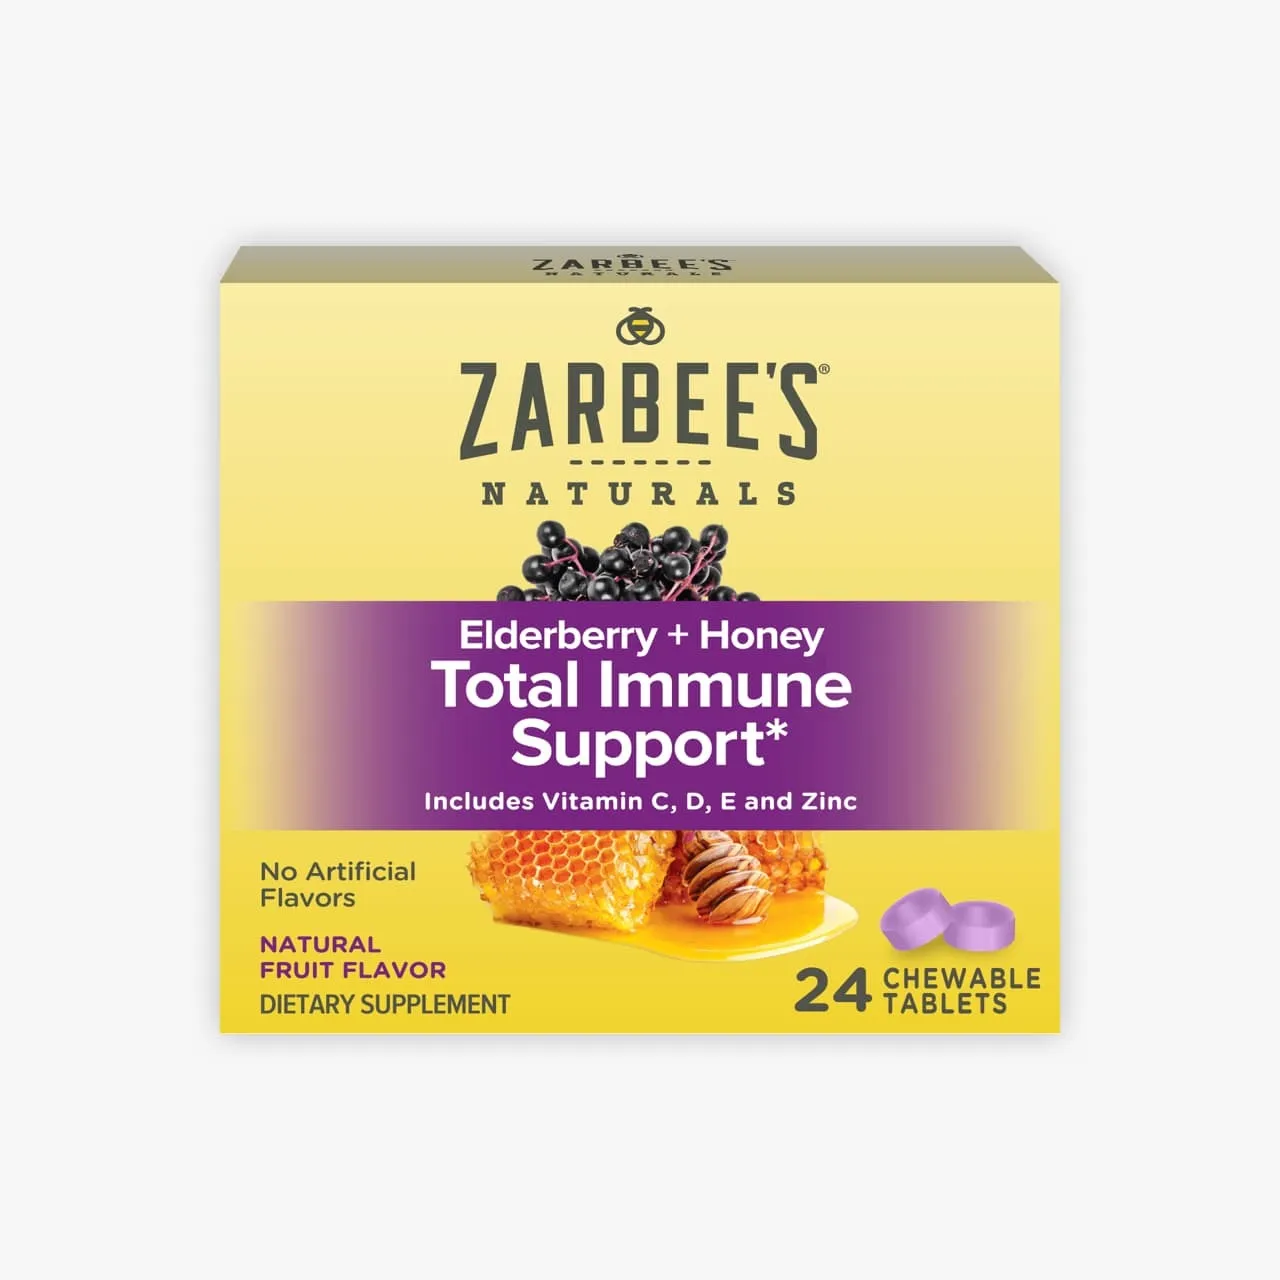 Front packaging of Zarbee’s® Elderberry + Honey Total Immune Support* Chewable in natural fruit flavor